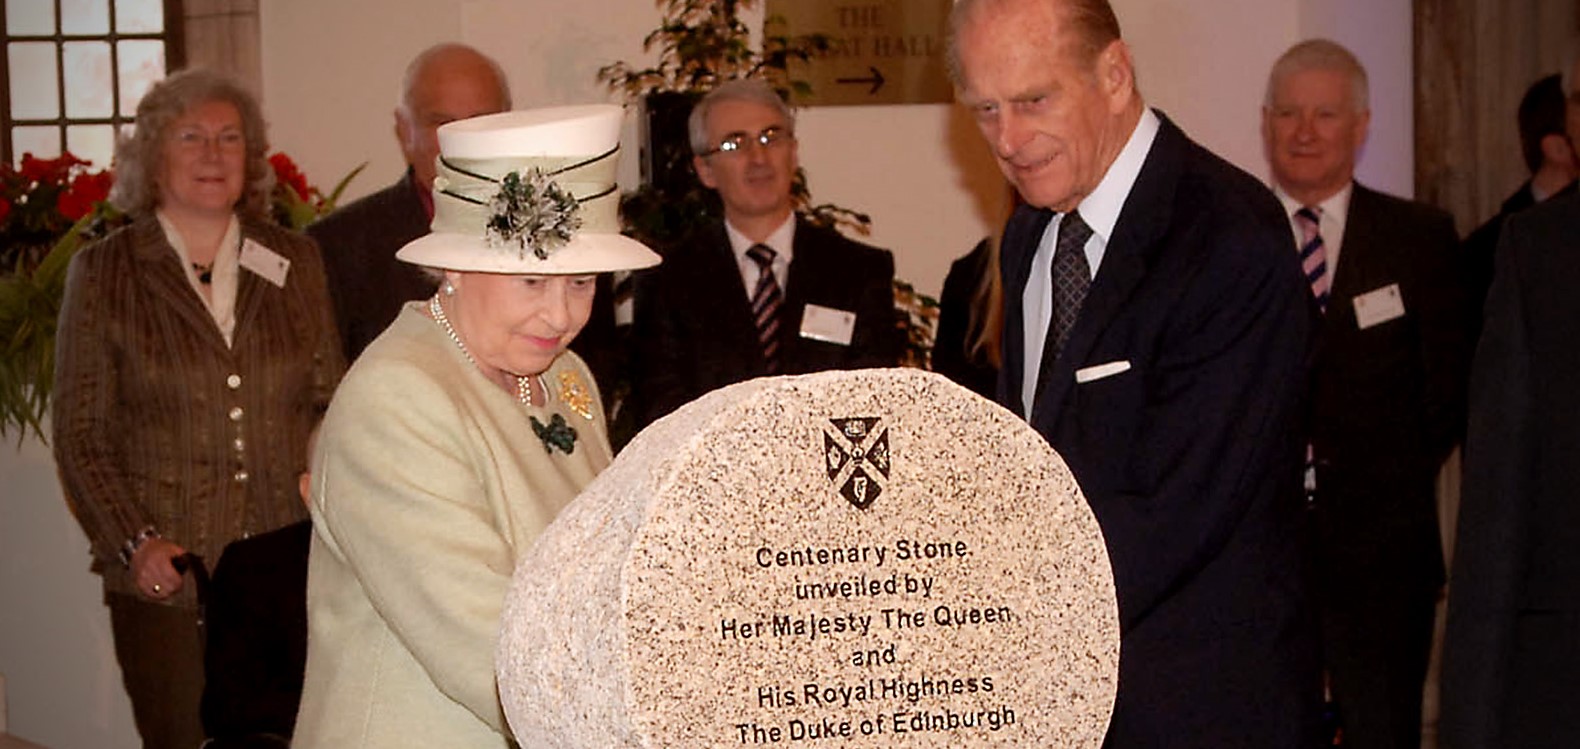 Queen Elizabeth and the Duke of Edinburgh view the Centenary Stone